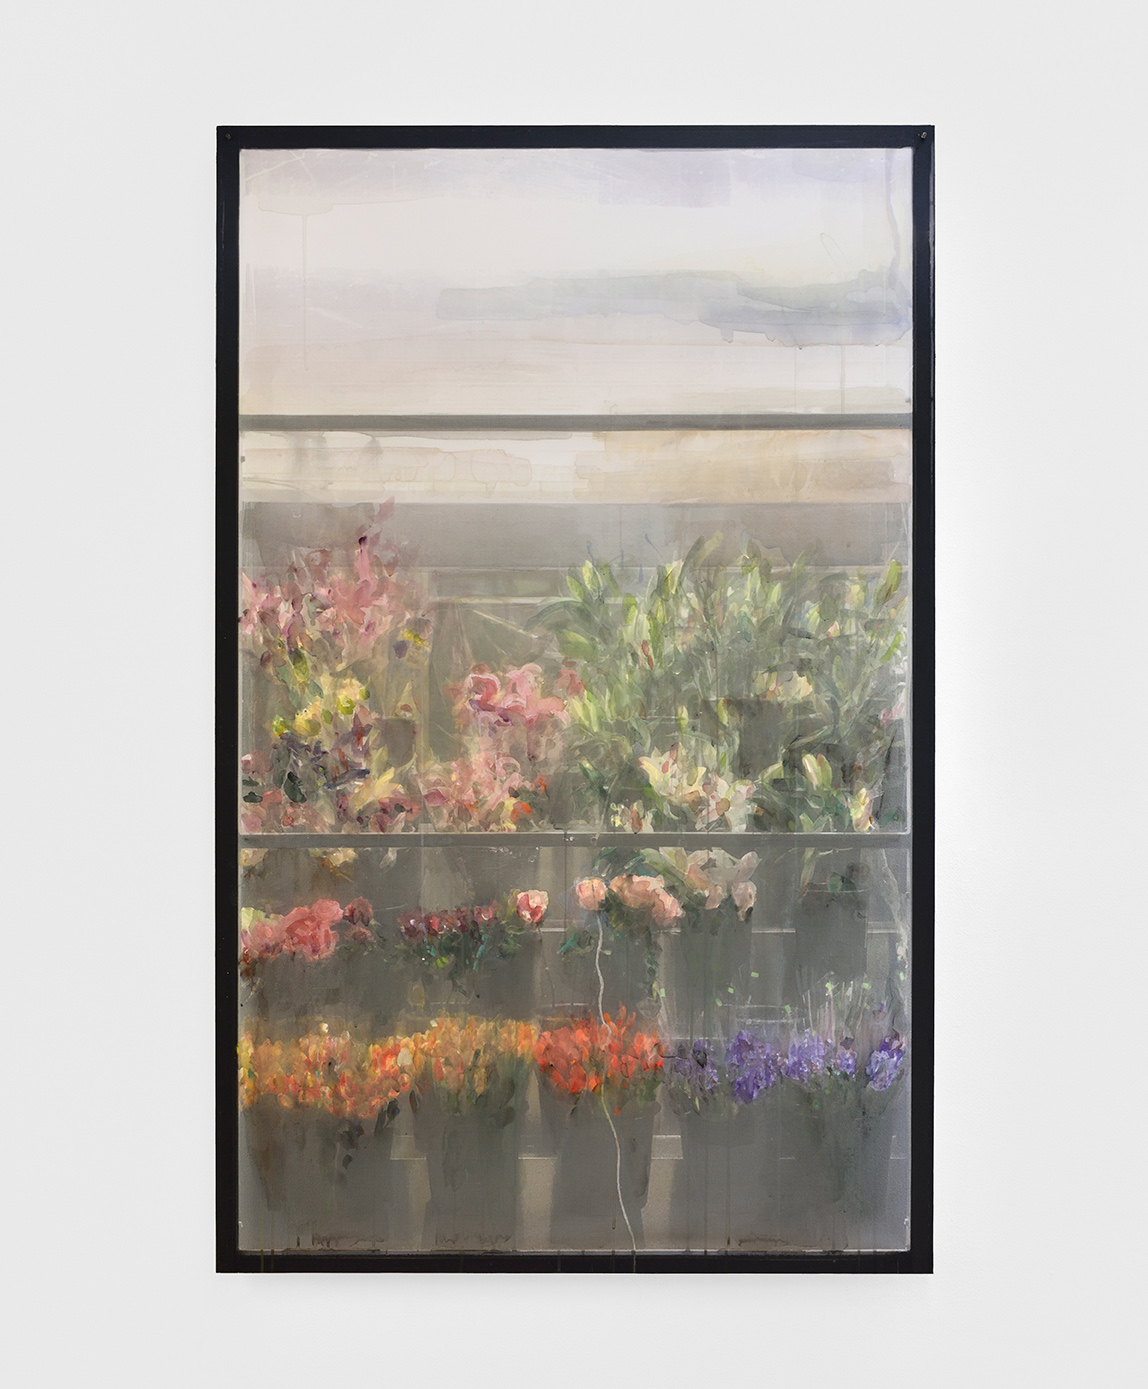   Deli Window III , 2019 gouache and watercolour on printed veil, dibond 126,5 x 79 cm  private collection  ©&nbsp;Rebecca Fanuele 